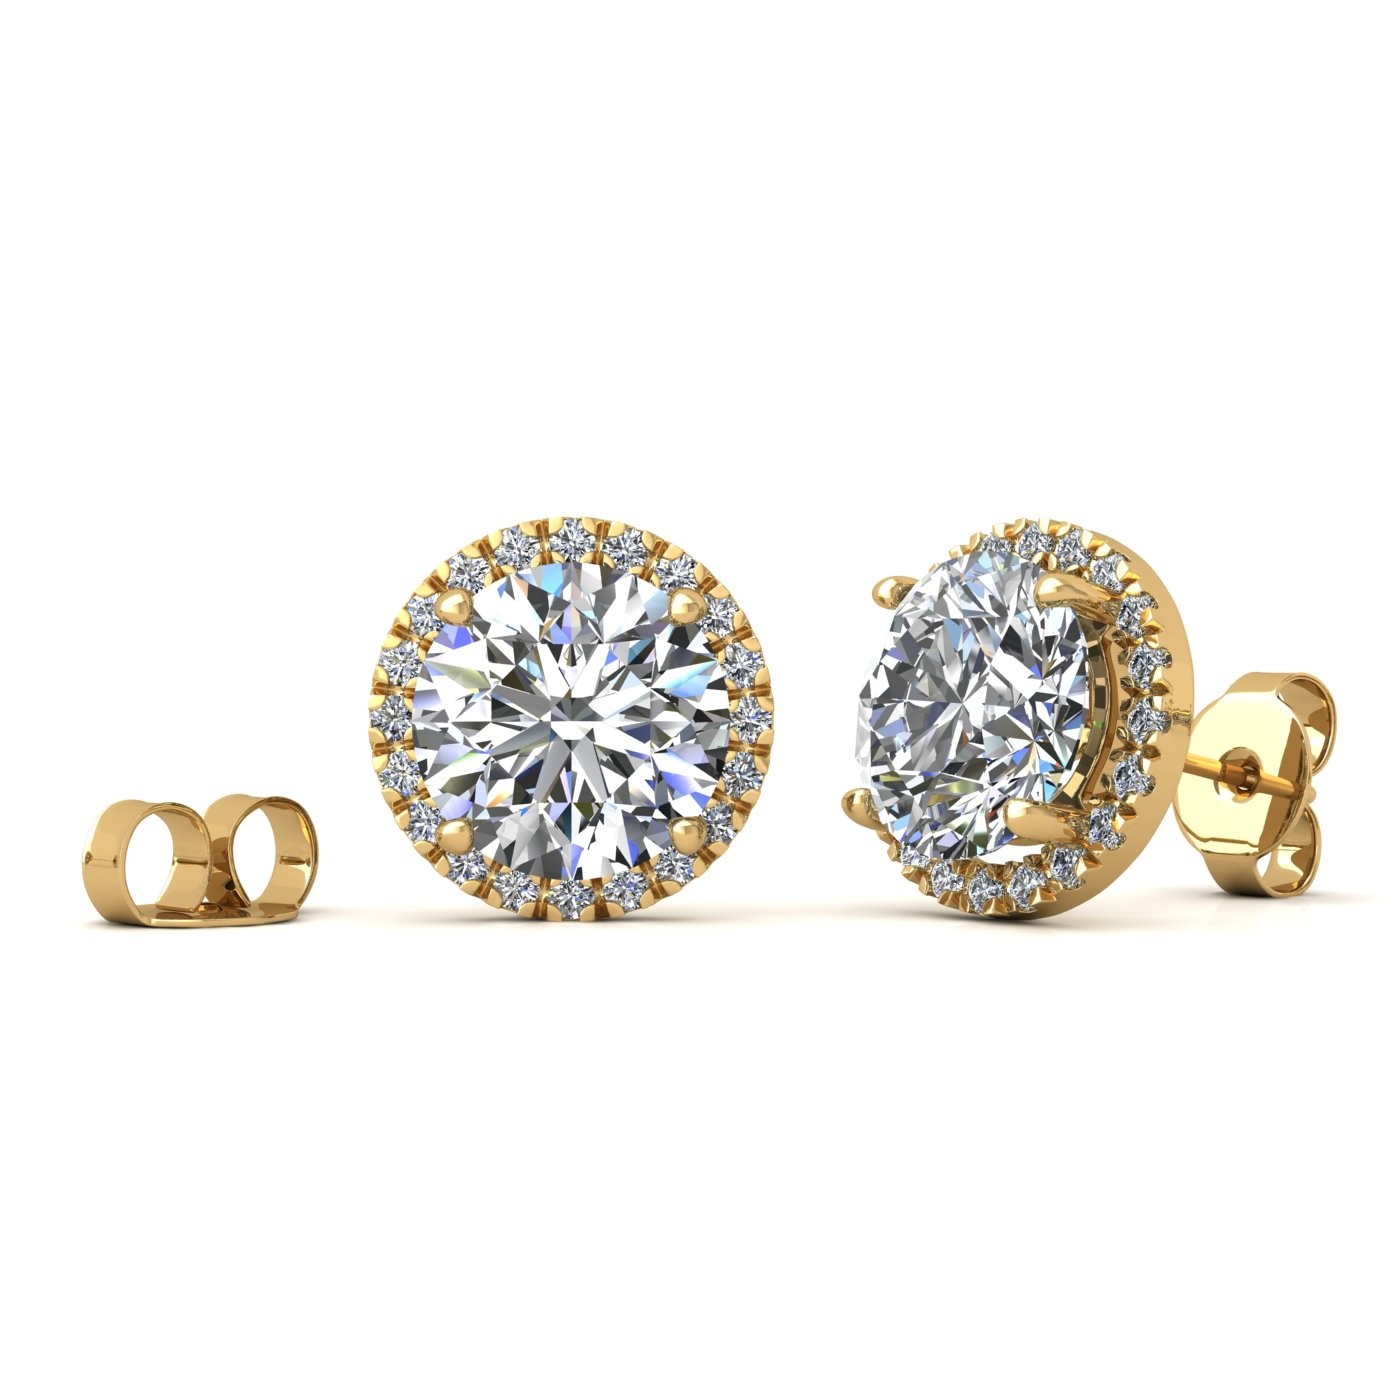 18k yellow gold 2 ct each (4,0 tcw) 4 prongs round shape diamond earrings with diamond pavÉ set halo Photos & images